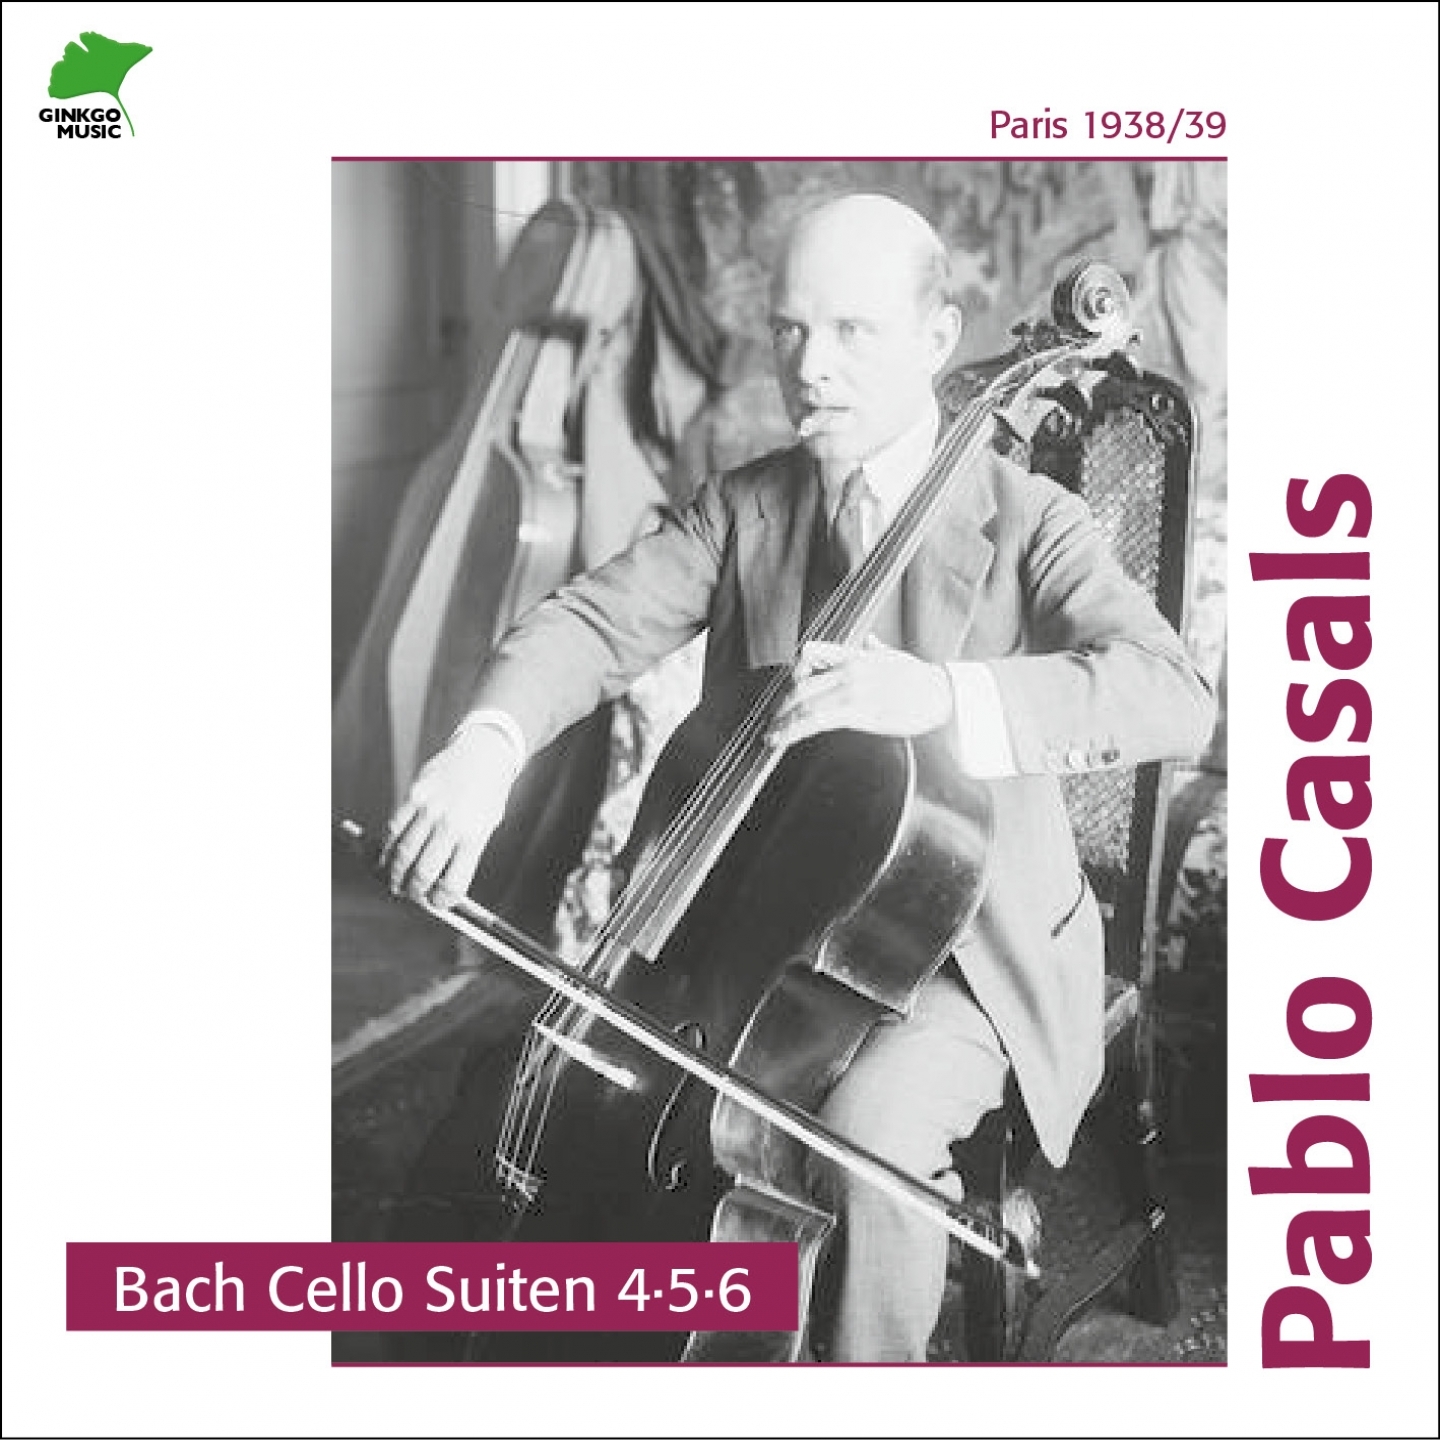 Cello Suite No. 5, in C Minor, BWV 1011 Gavotte 1 & 2